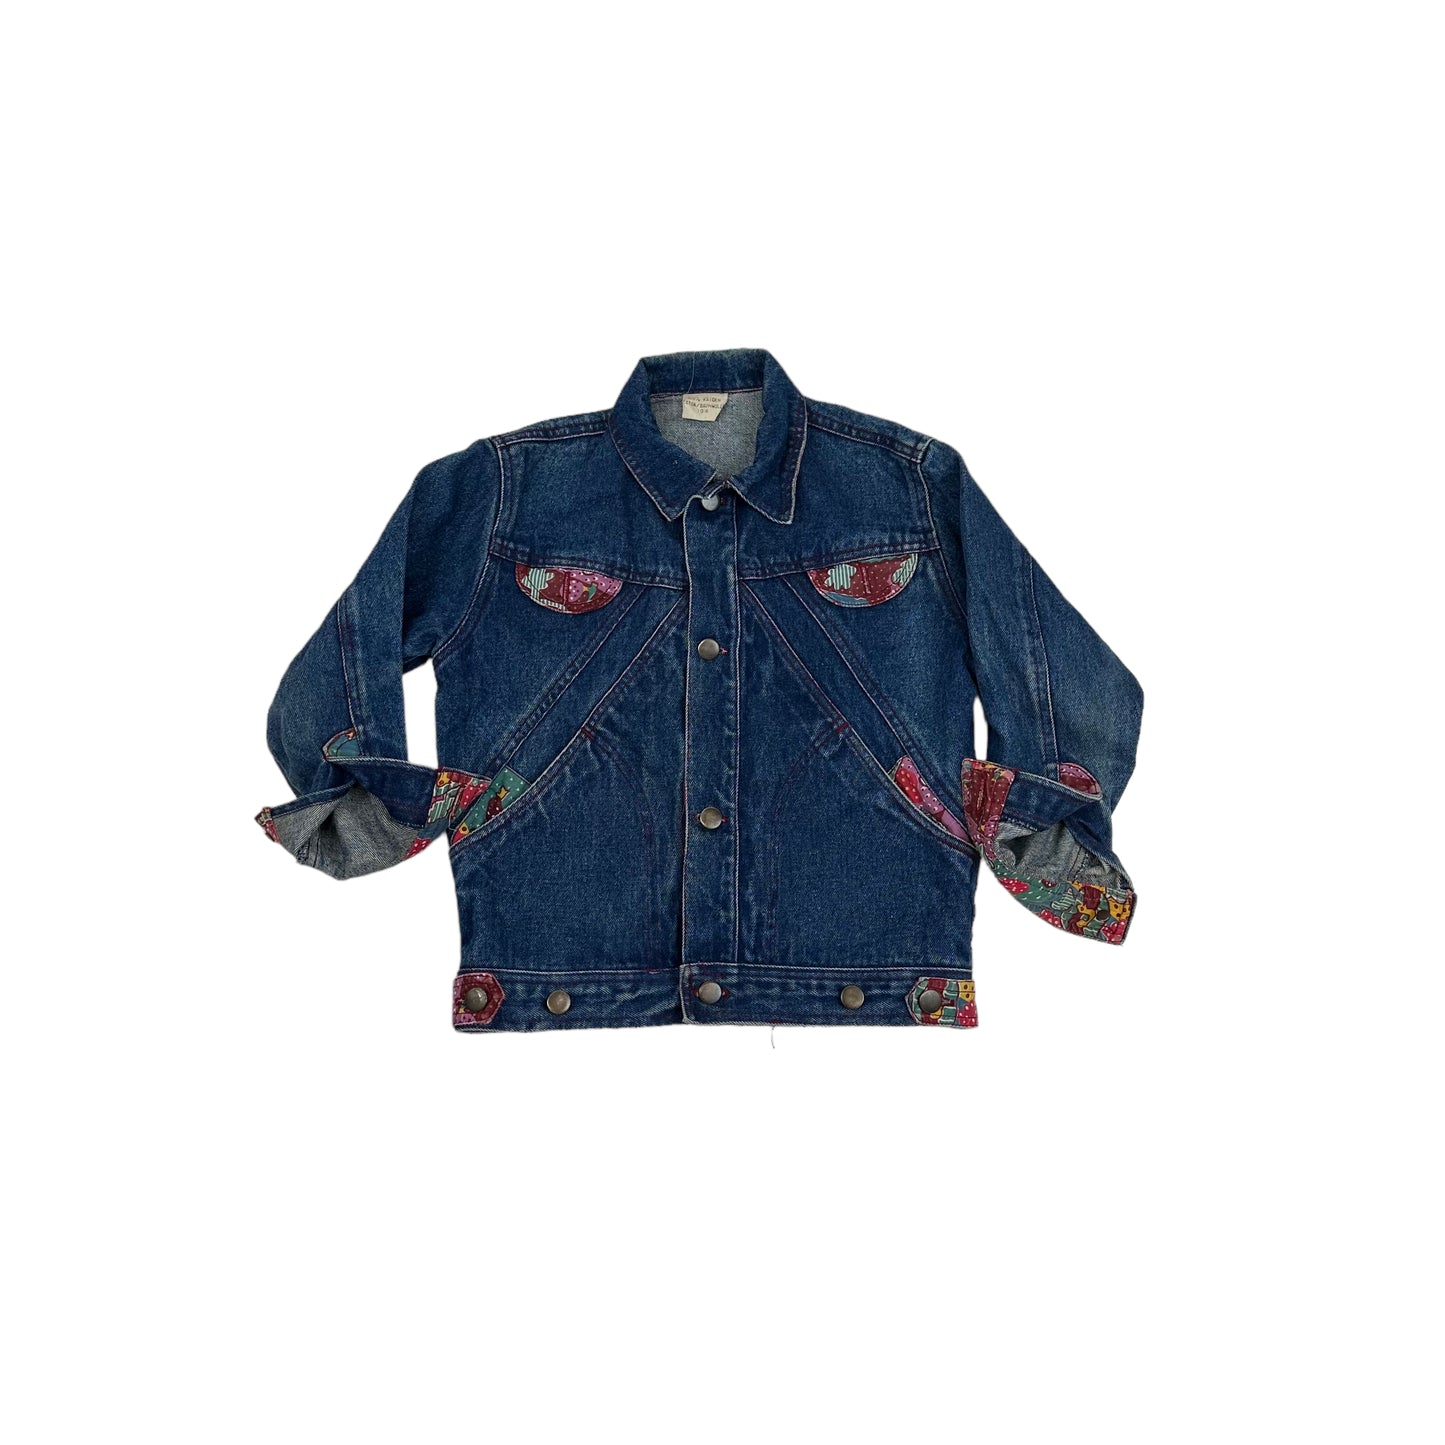 Vintage Denim Jacket (Age 10)